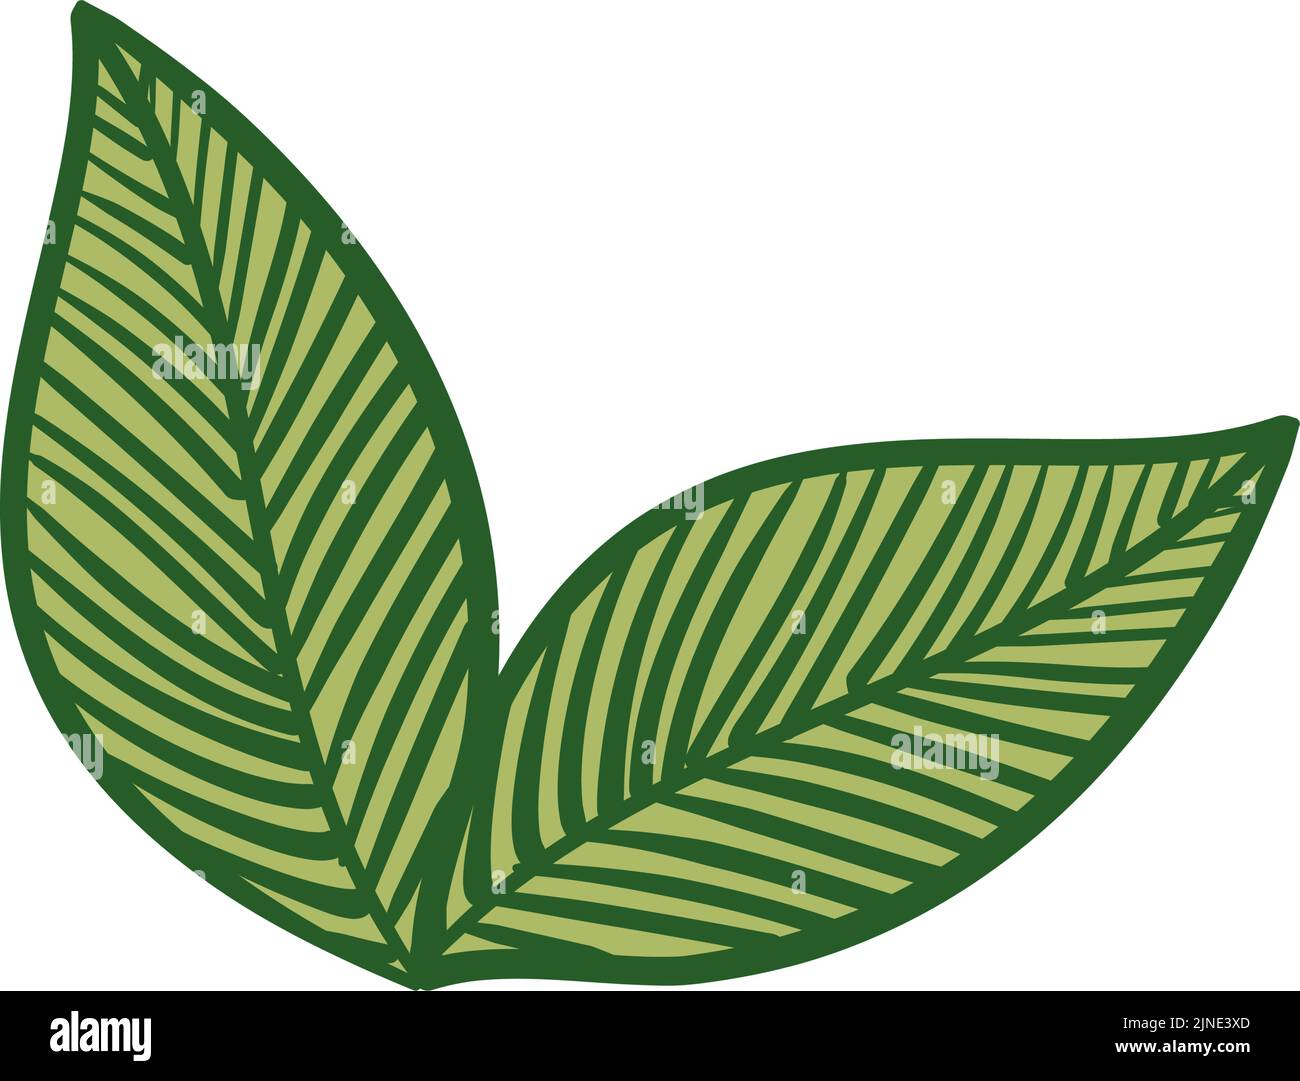 Botanical illustrations: leaves, veins, primitive images Stock Vector